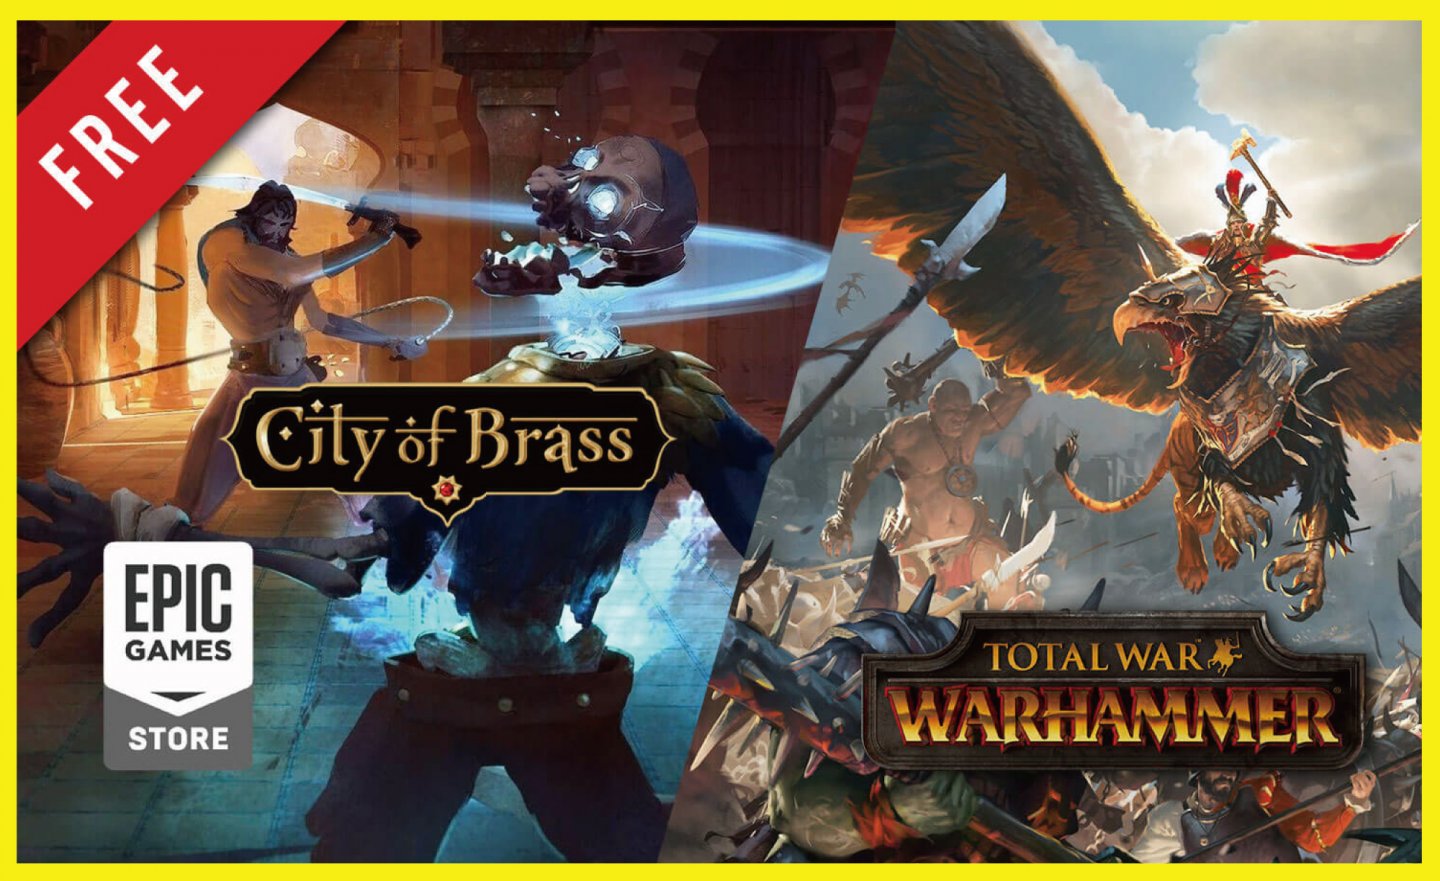 【限時免費】《City of Brass》與《Total War: WARHAMMER》放送中，2022 年 4 月 7 日 23:00 前領取